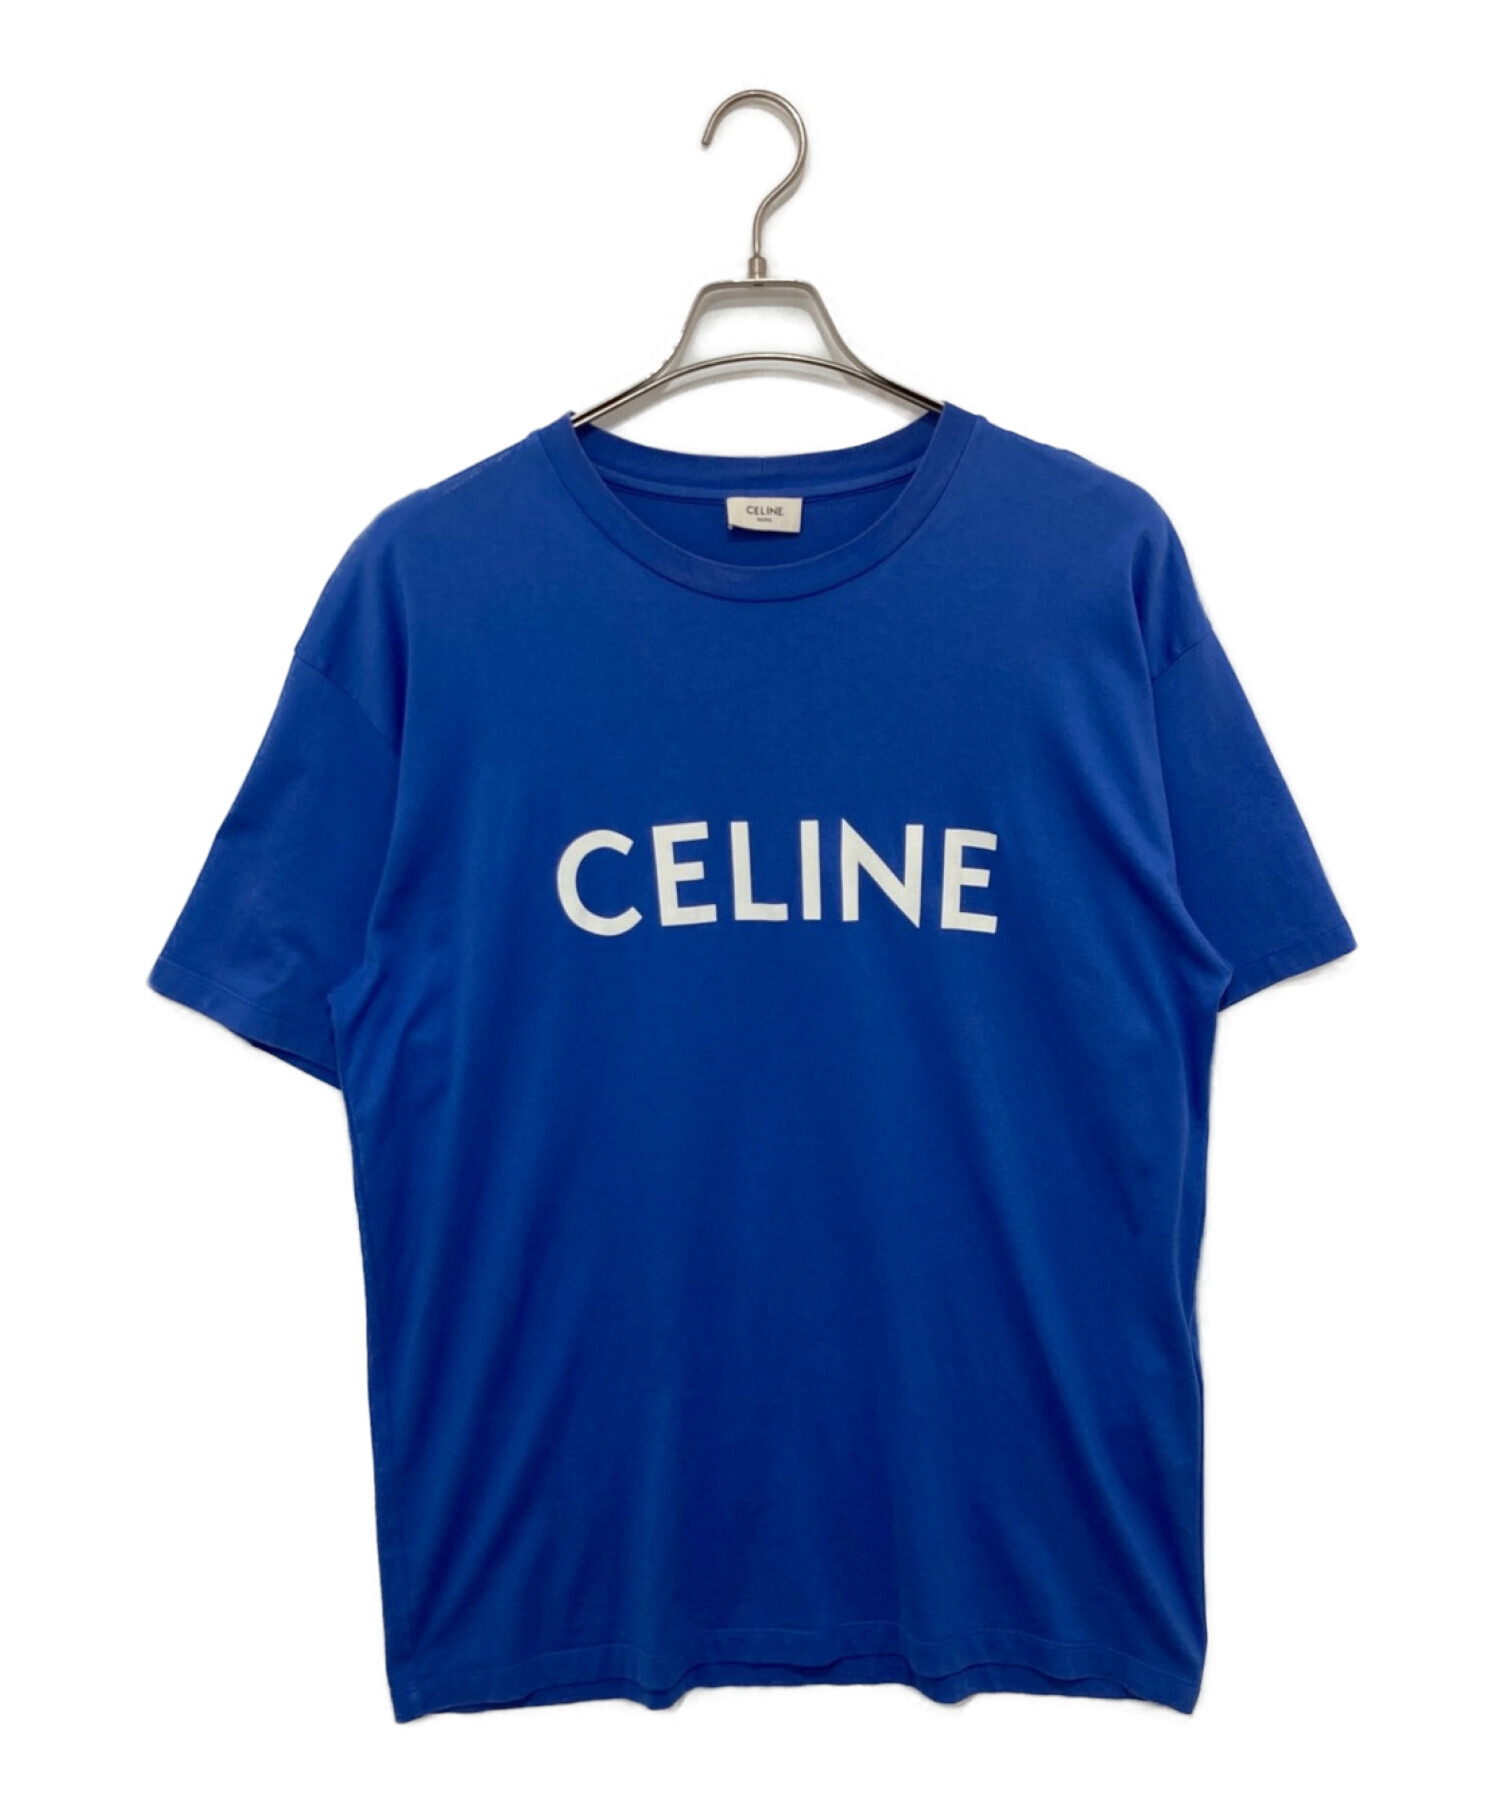 CELINE (セリーヌ) ルーズ Tシャツ ブルー サイズ:M